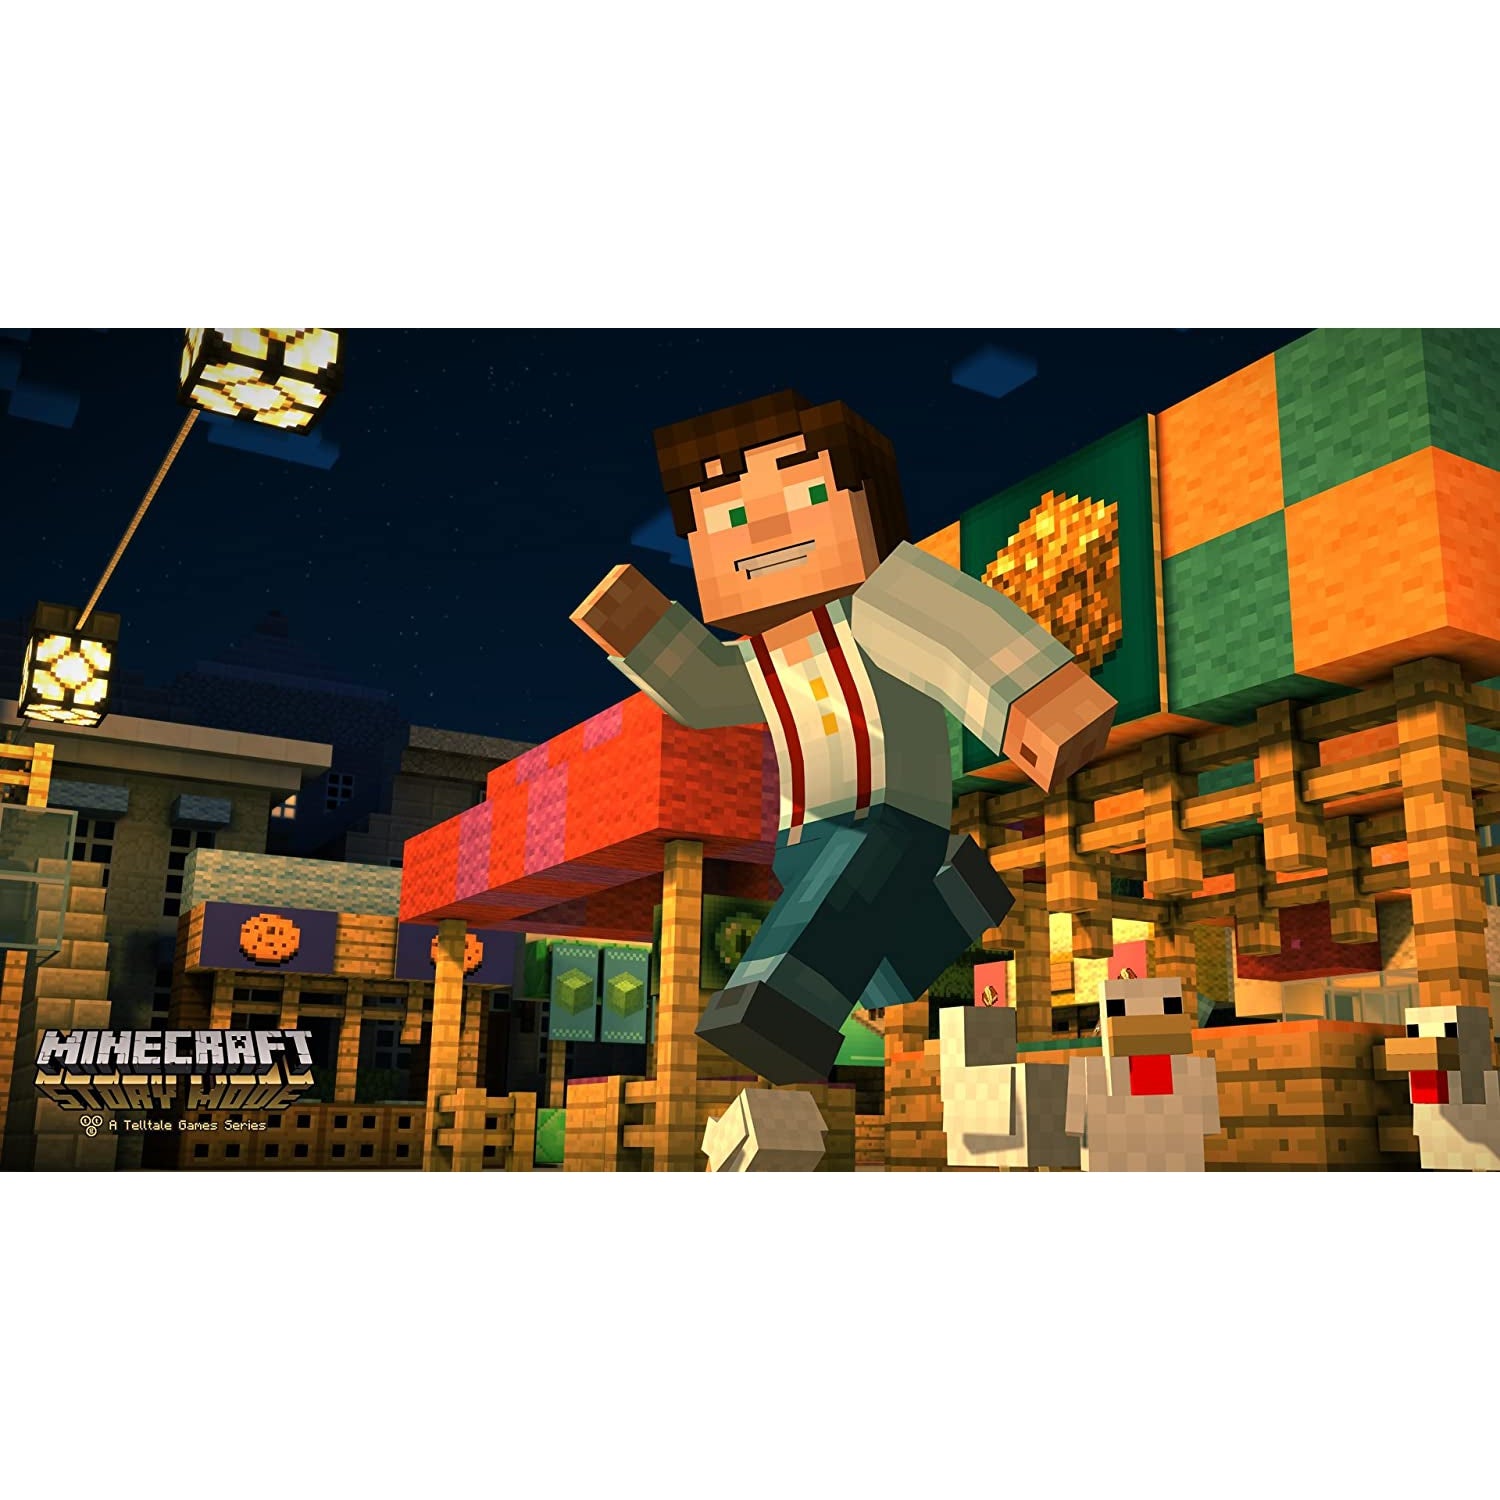 Minecraft Story Mode A Telltale Game Series Season Disc (Xbox One)